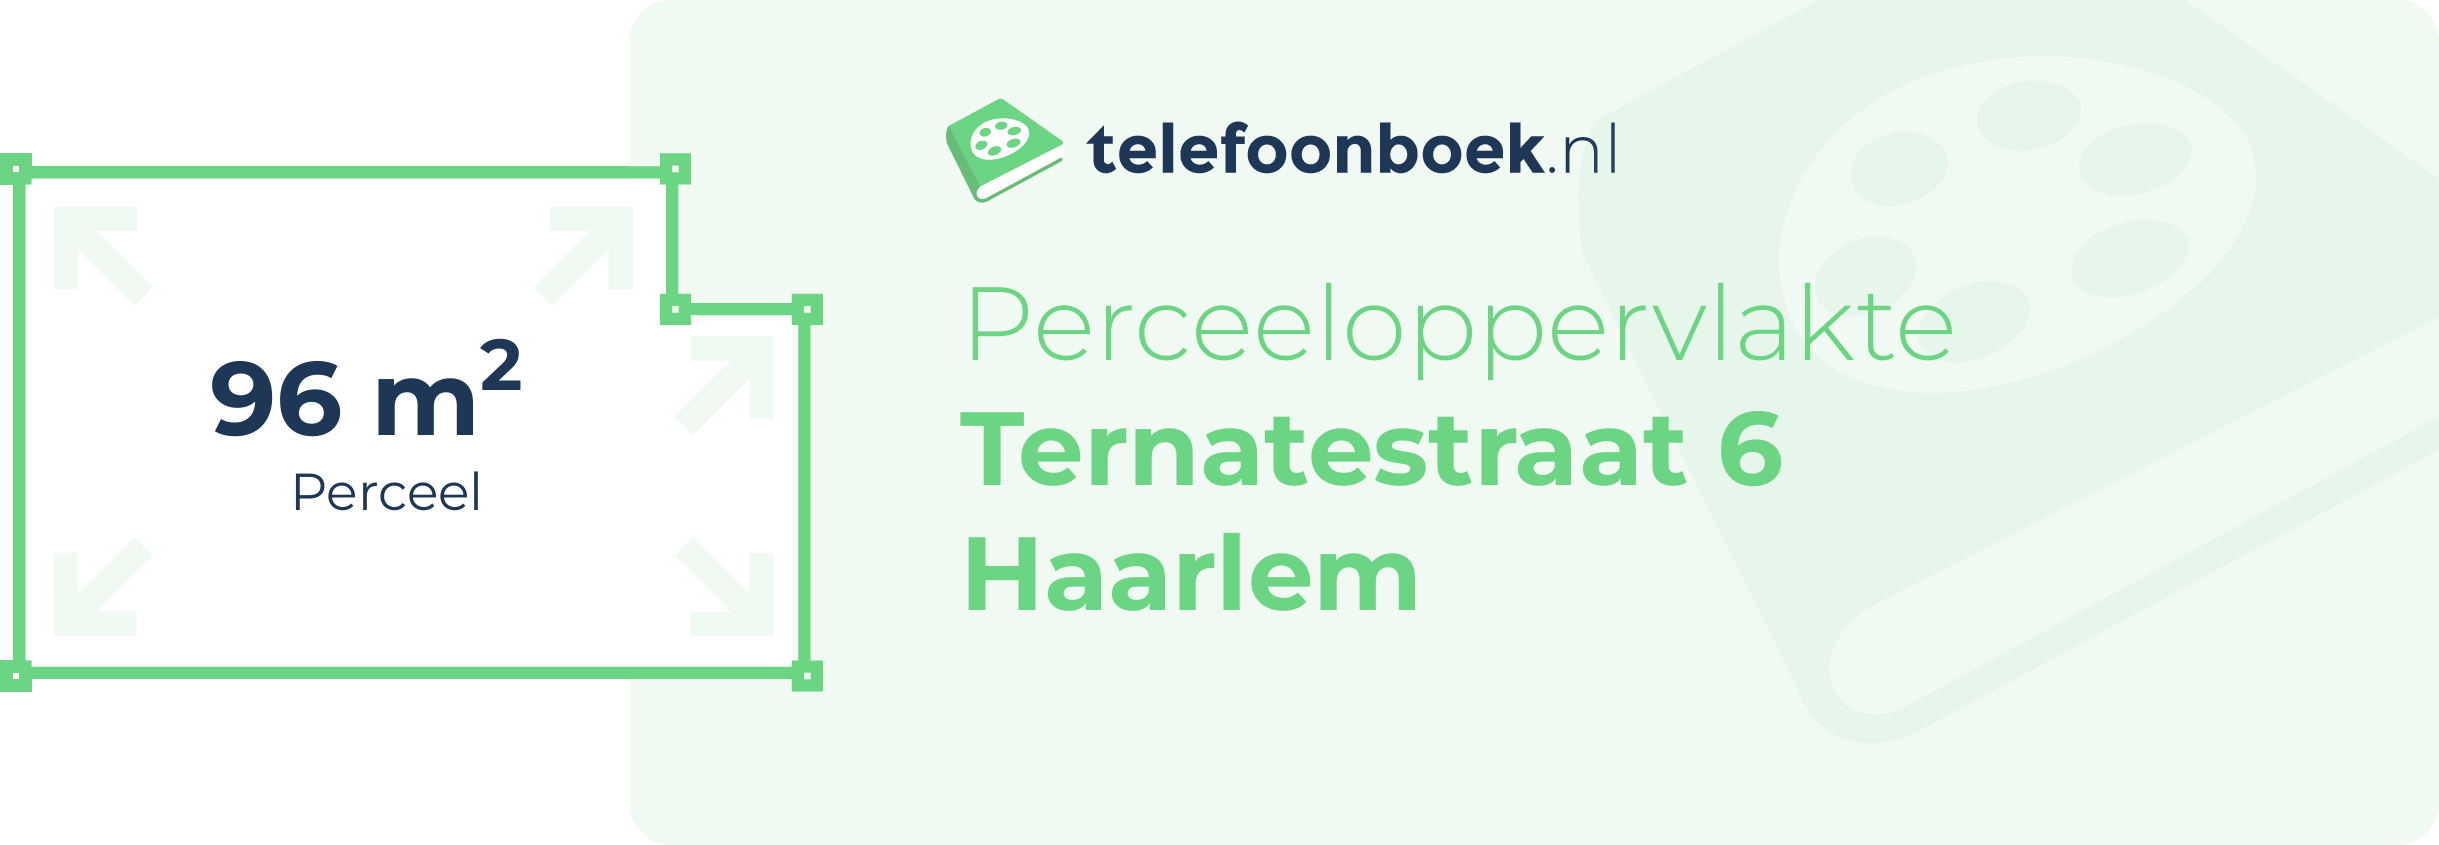 Perceeloppervlakte Ternatestraat 6 Haarlem